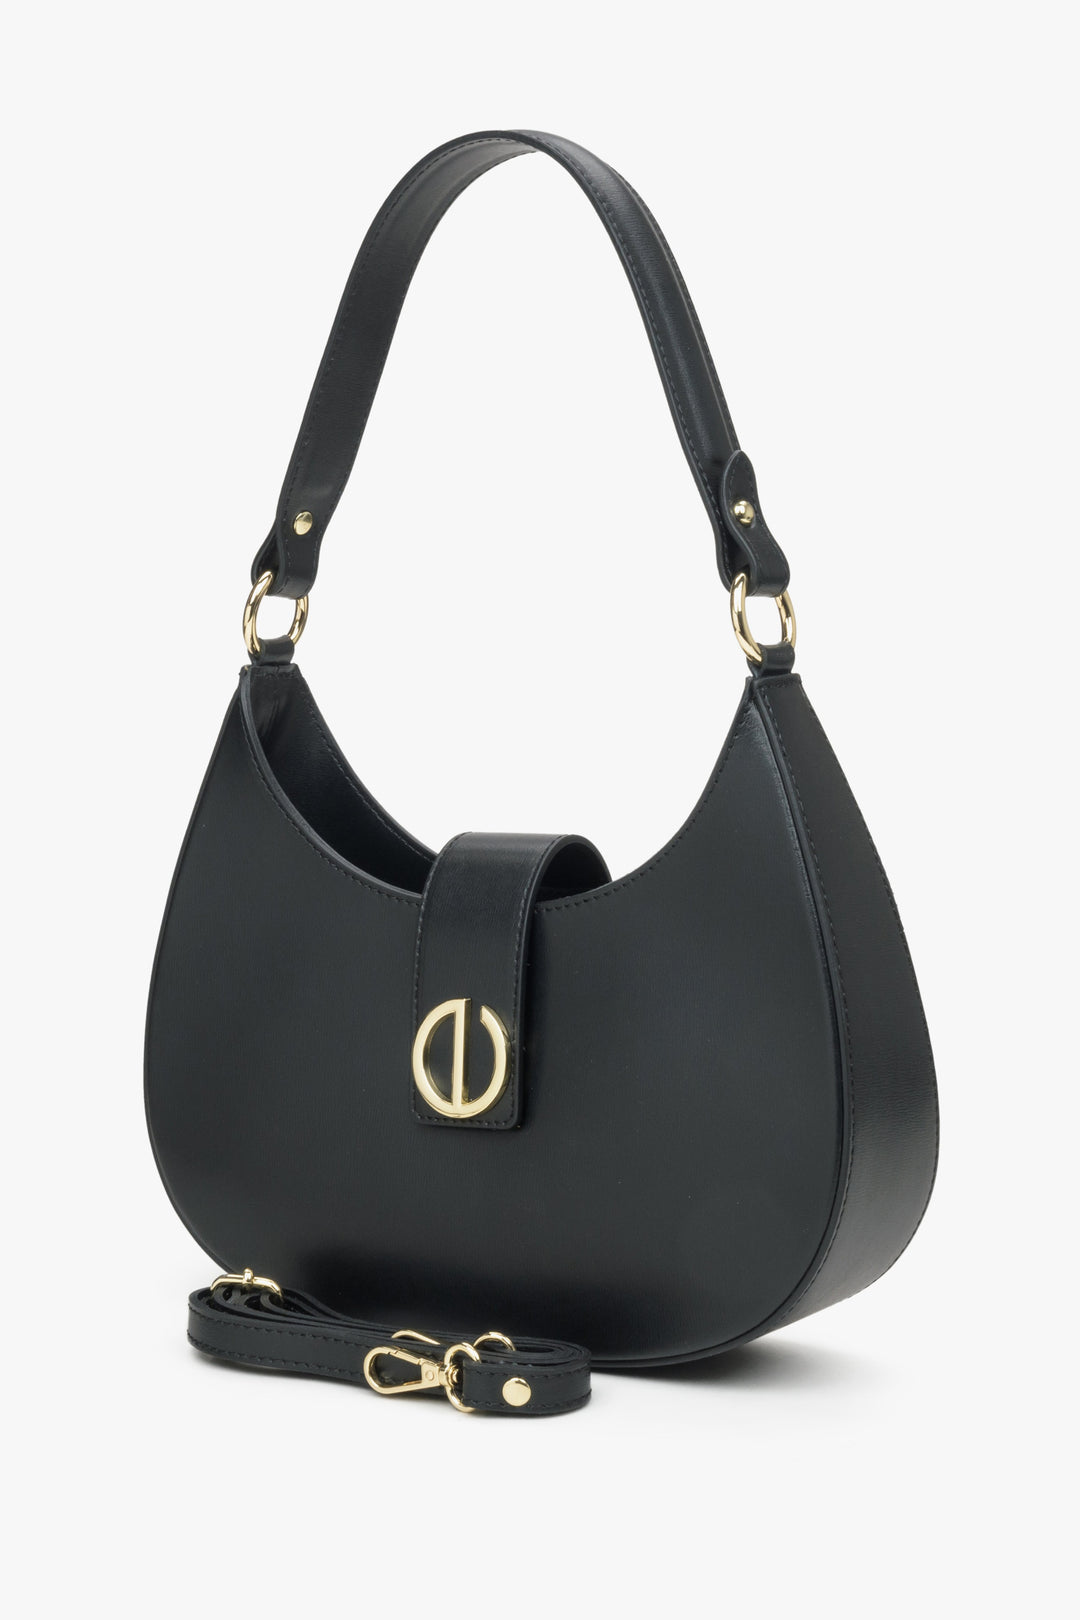 Estro women's black baguette-style handbag made of Italian genuine leather.